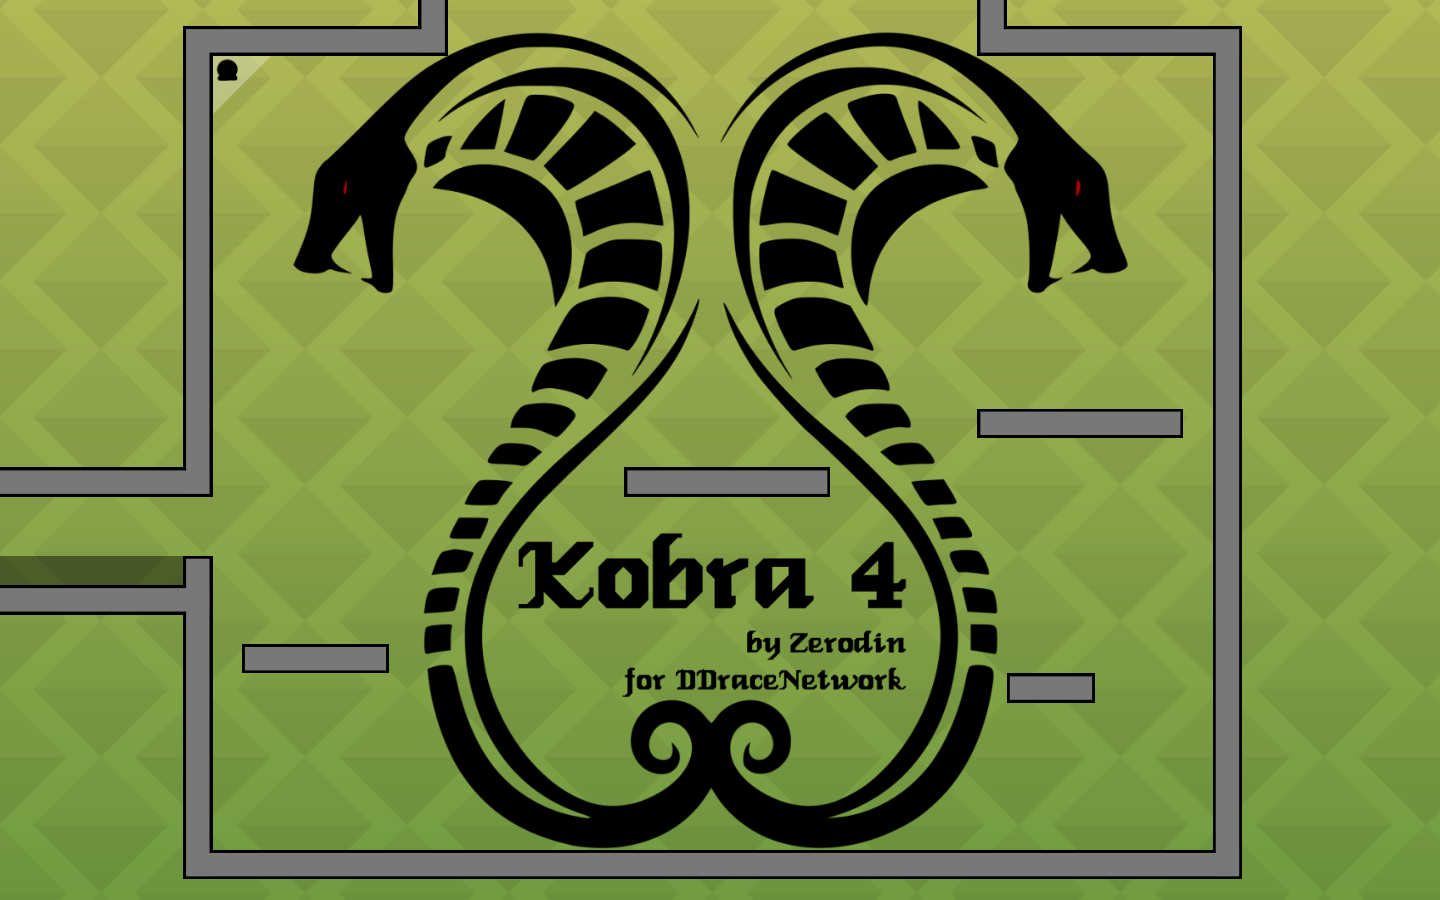 Kobra_4.png